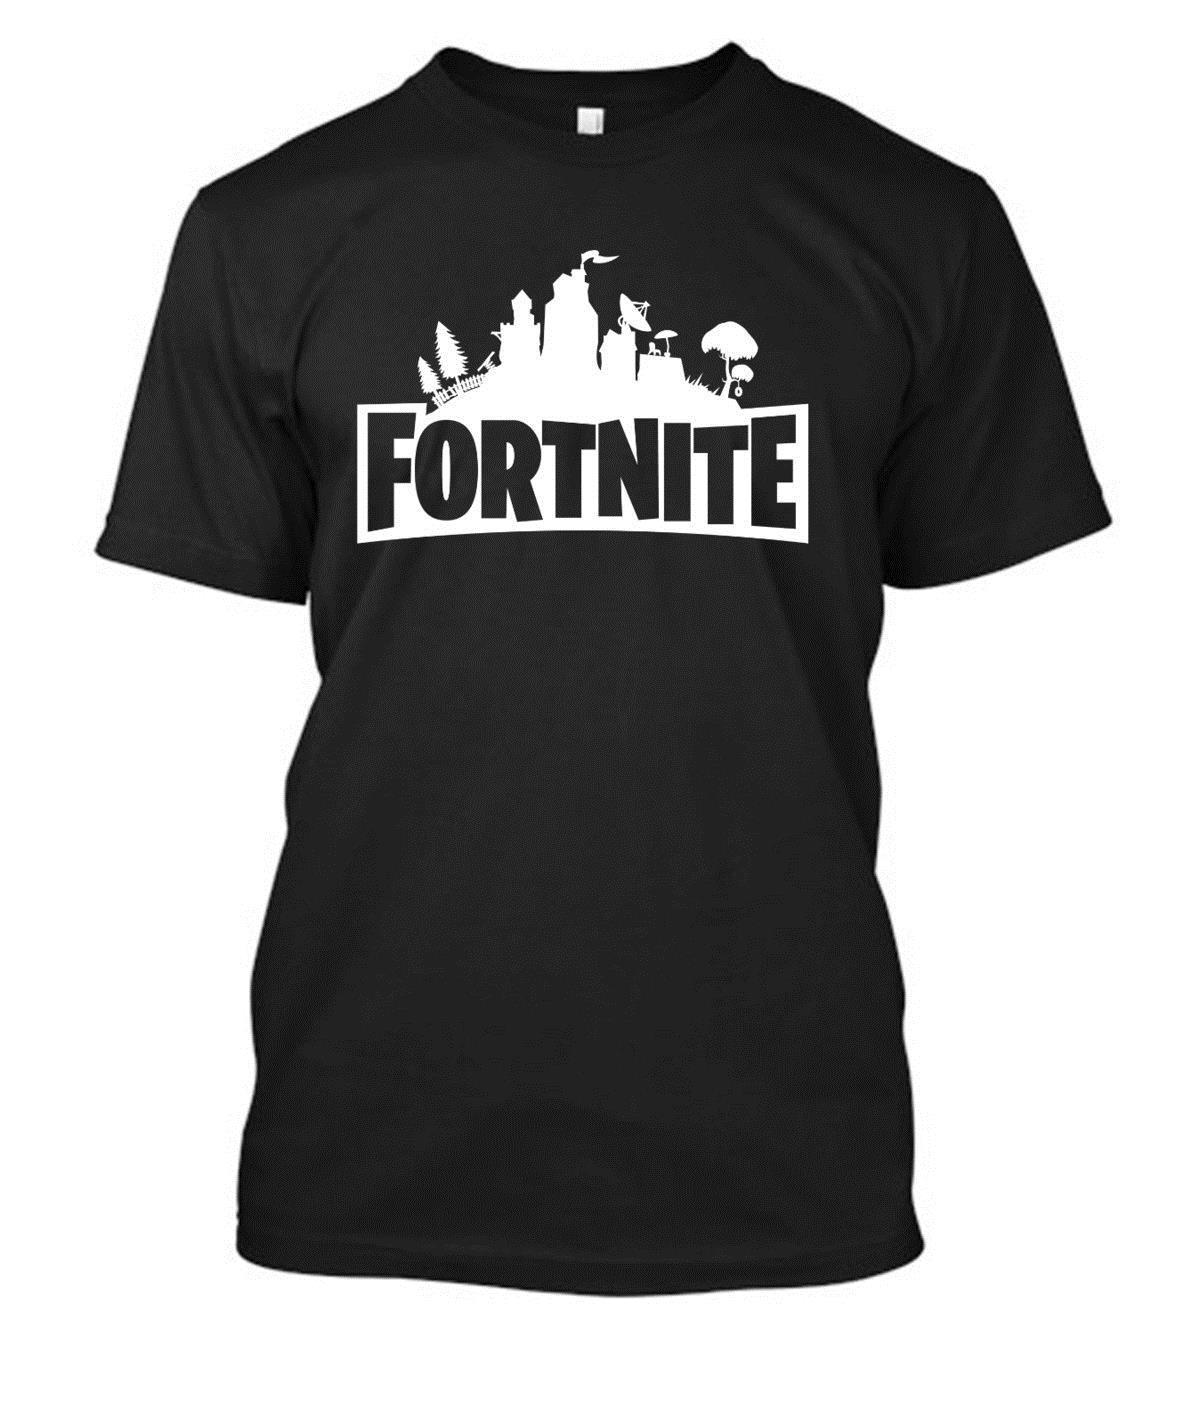 Fortnite Battle Royale Logo - PERSONALISED Fortnite Battle Royale Logo Game T Shirt Tee Shirt ...